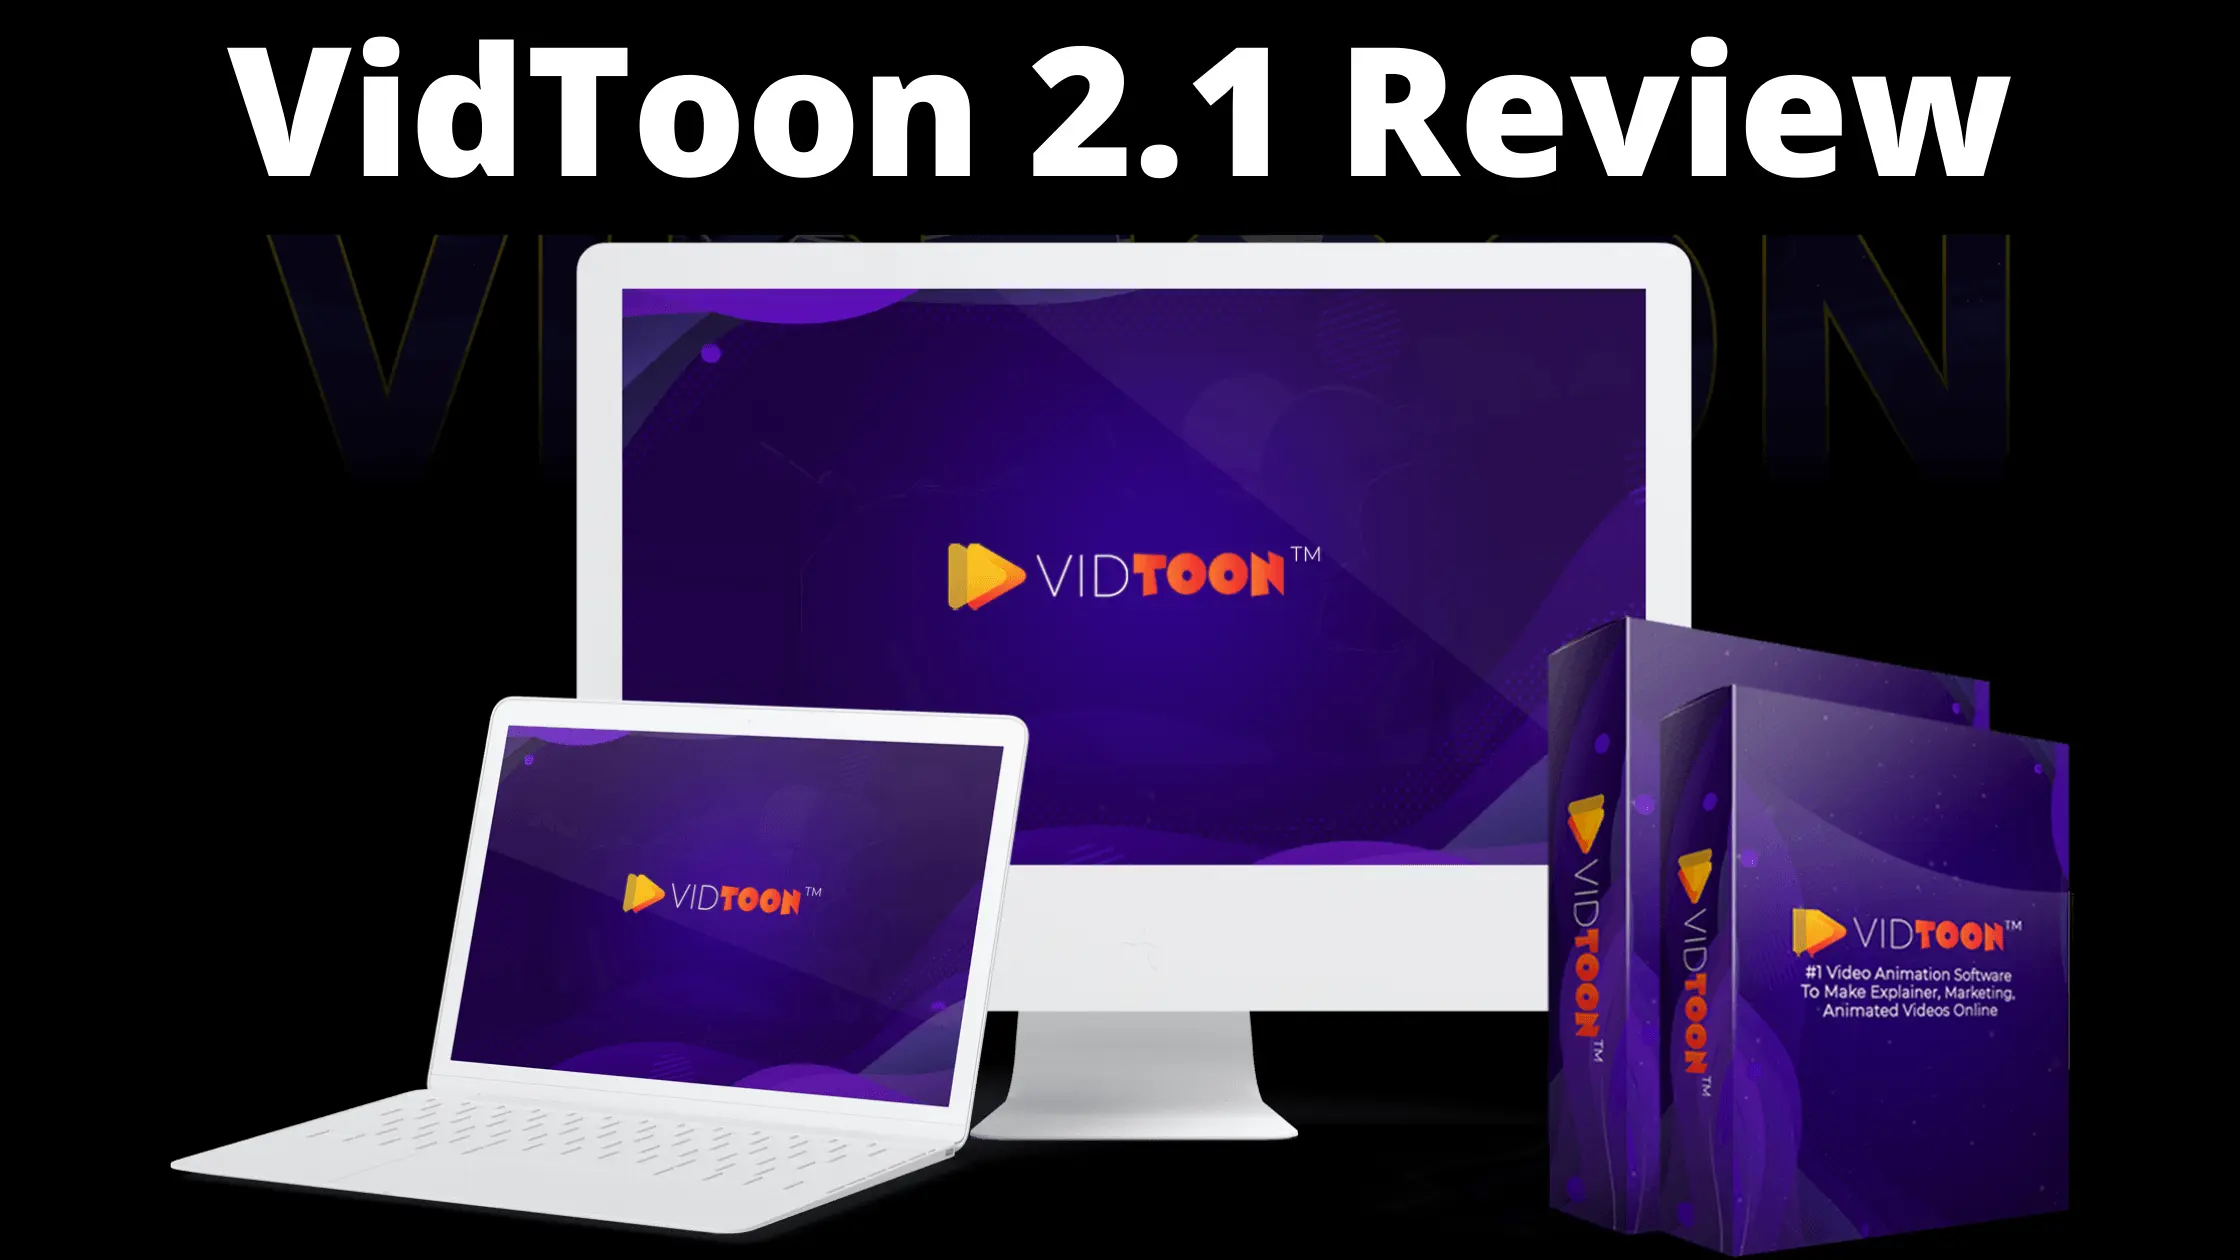 VidToon 2.1 Review